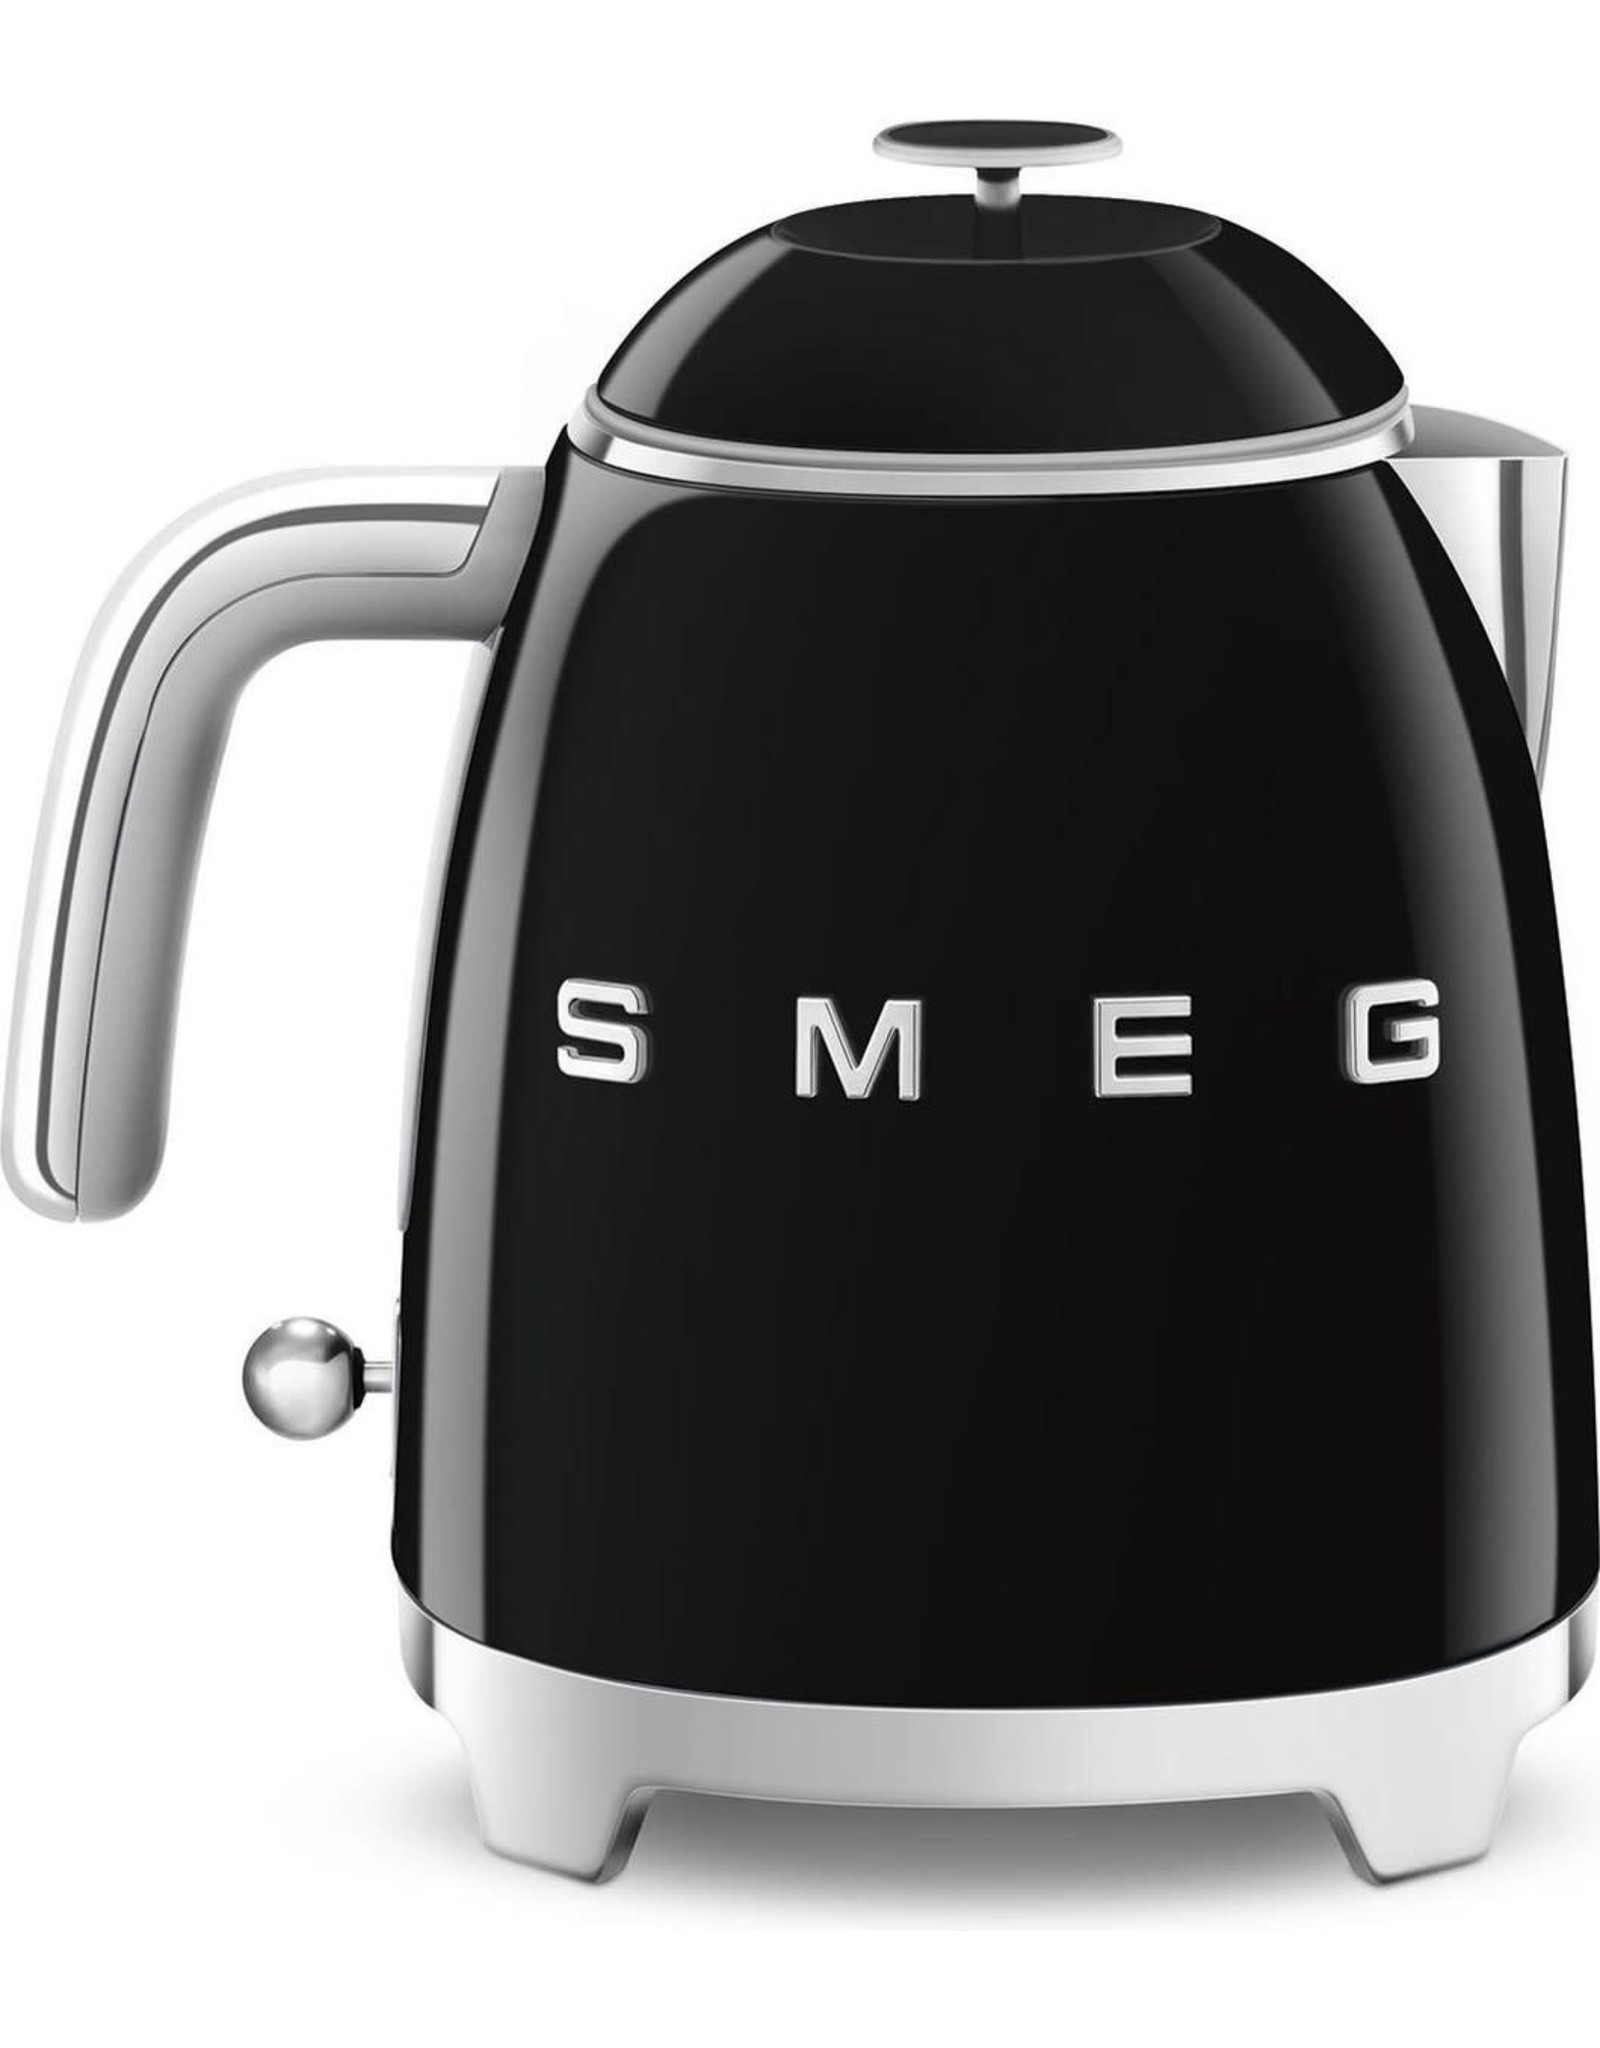 Smeg Smeg Waterkokers - Jaren 50 model - 0,8 liter - Zwart